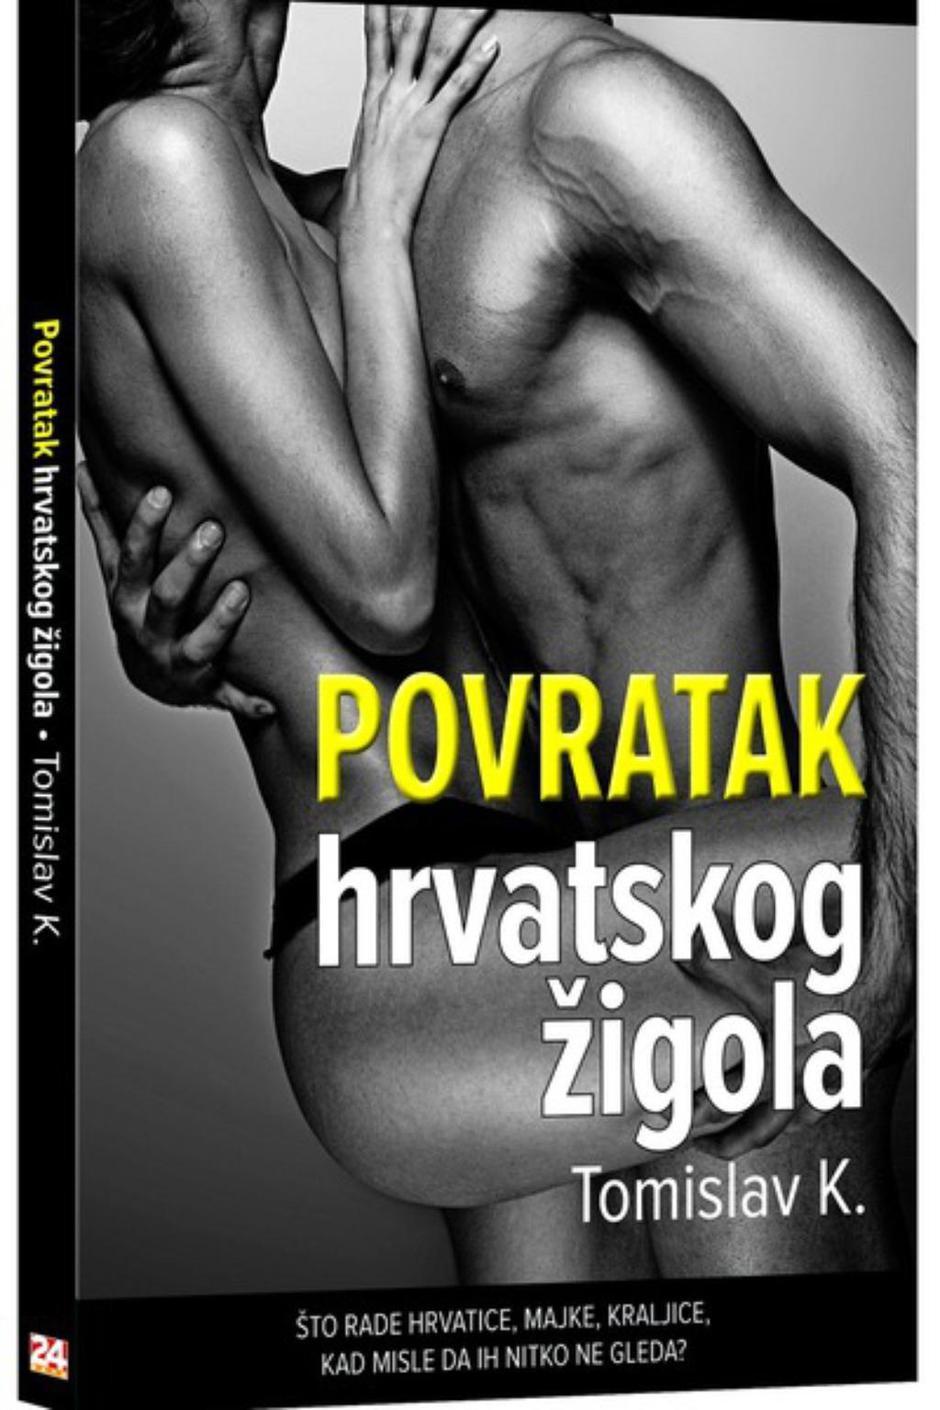 Povratak hrvatskog žigola | Author: express